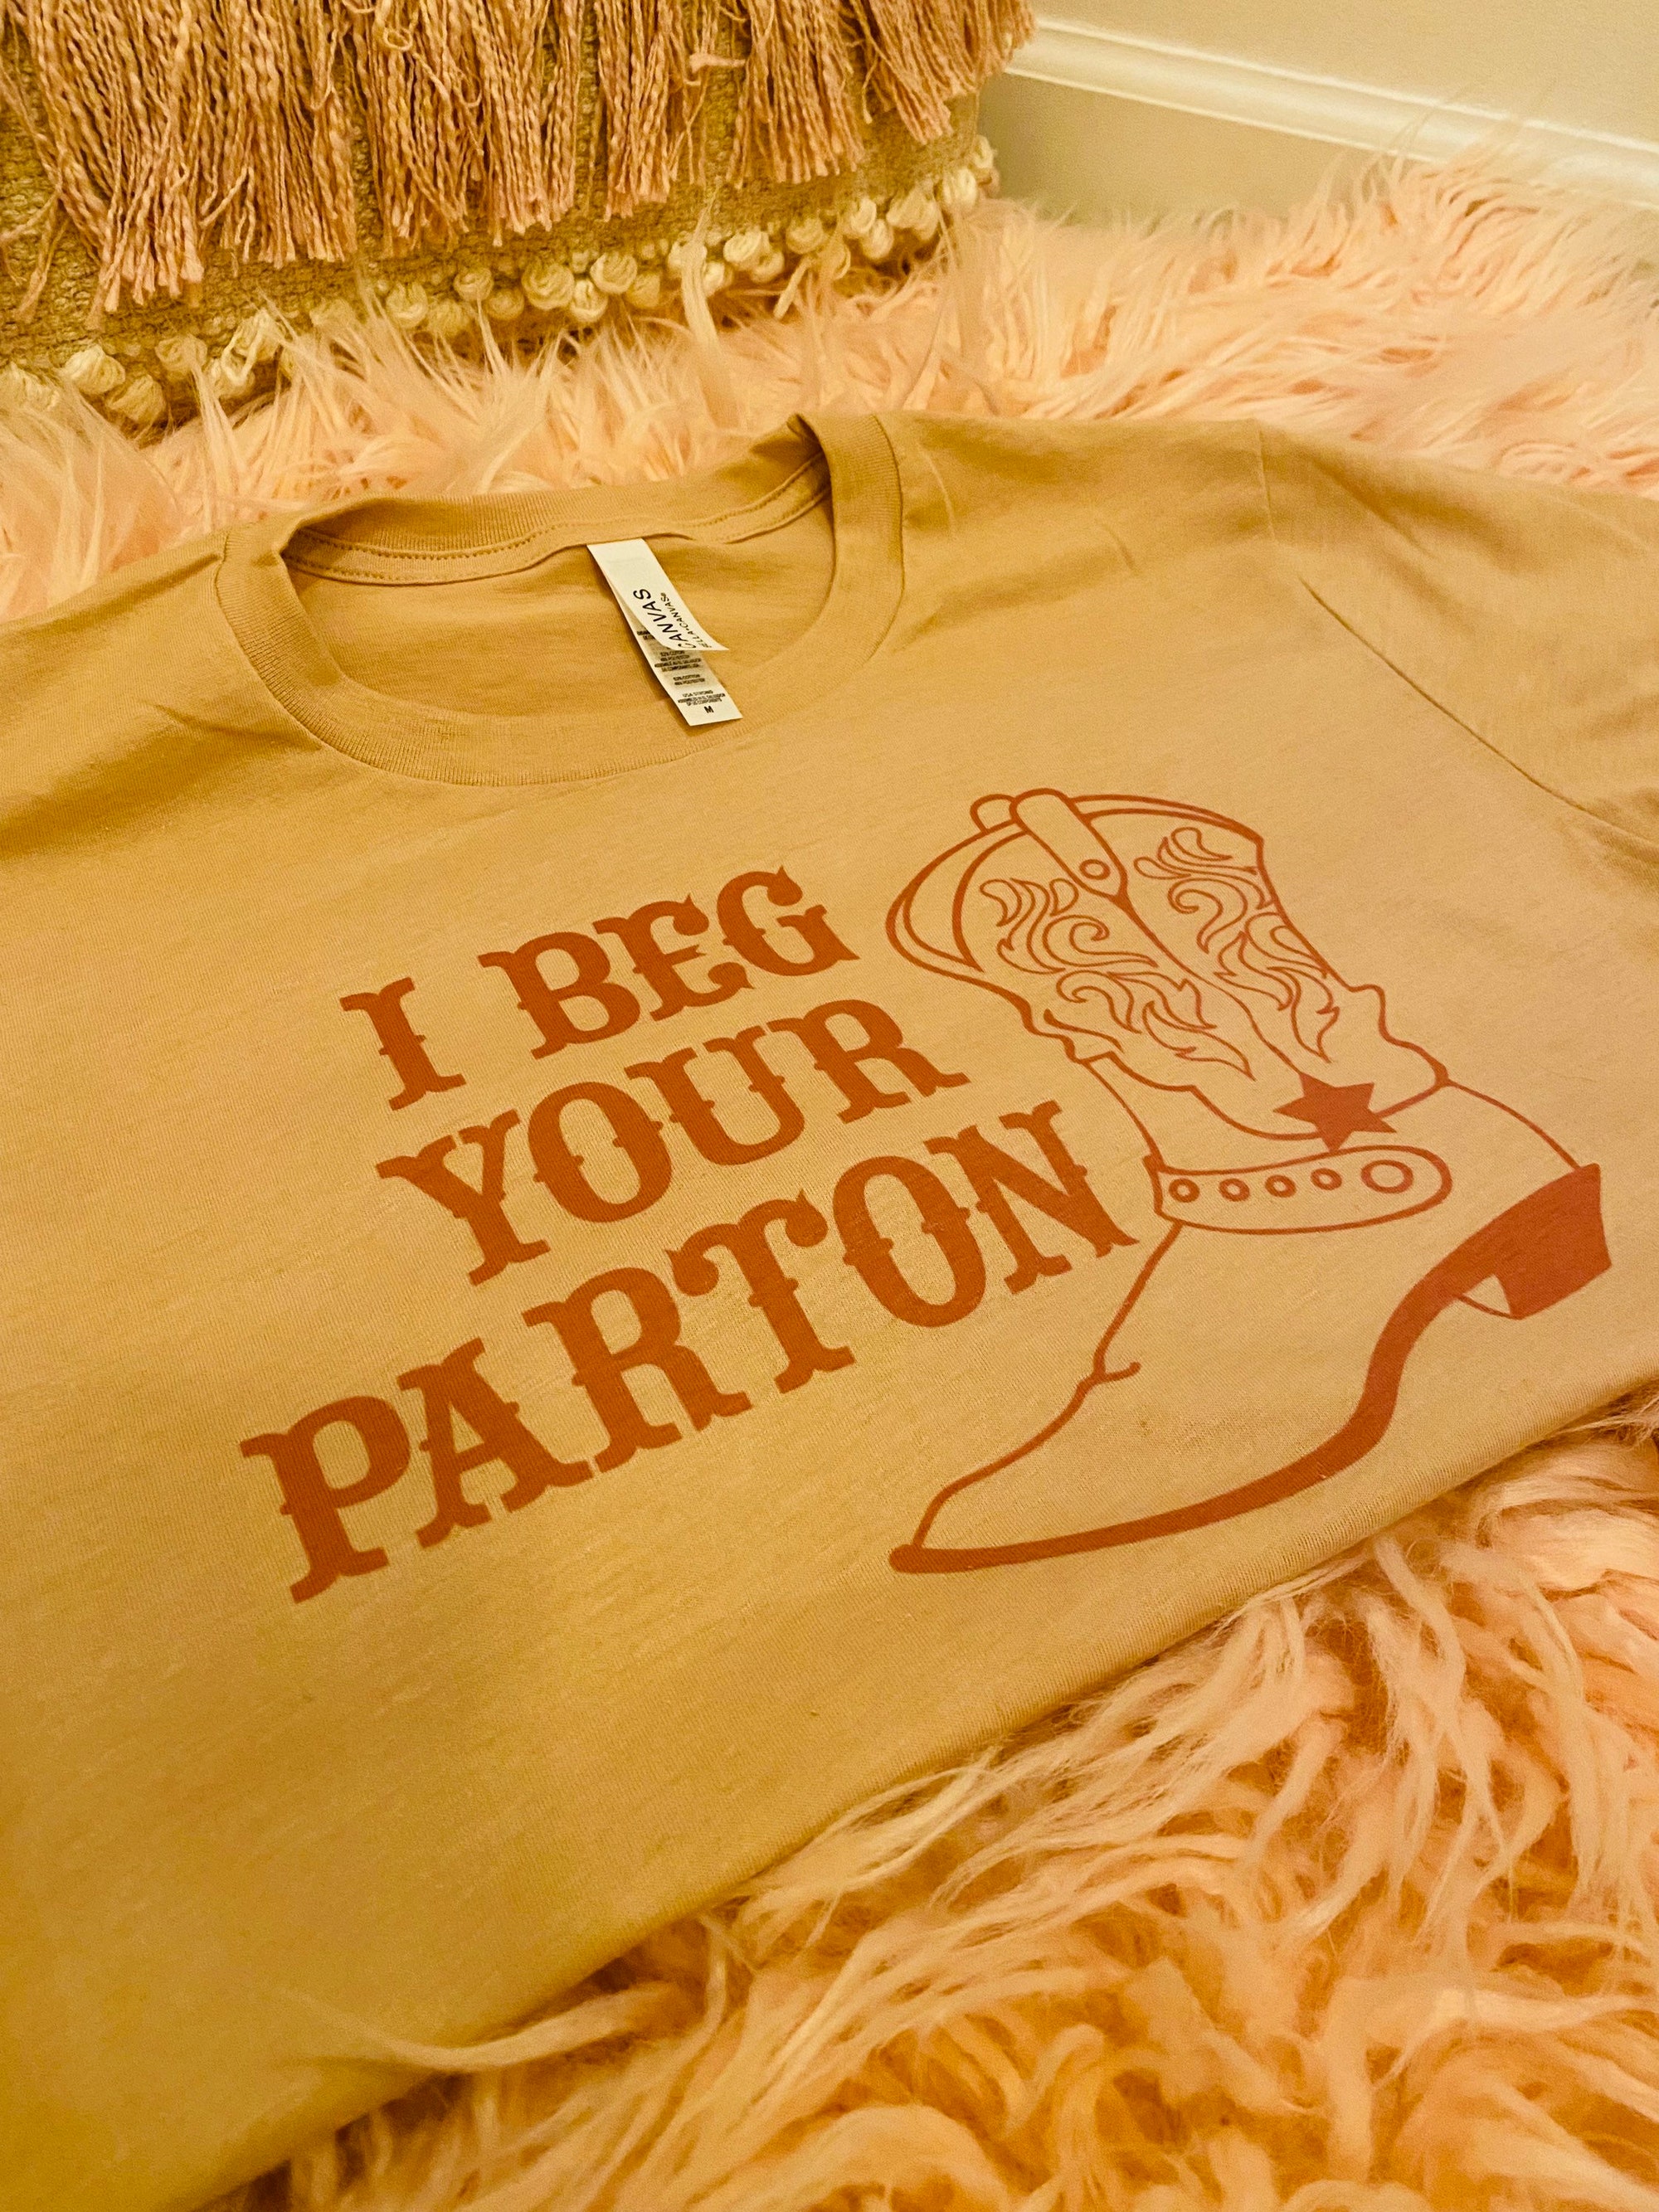 I Beg Your Parton Dolly shirt